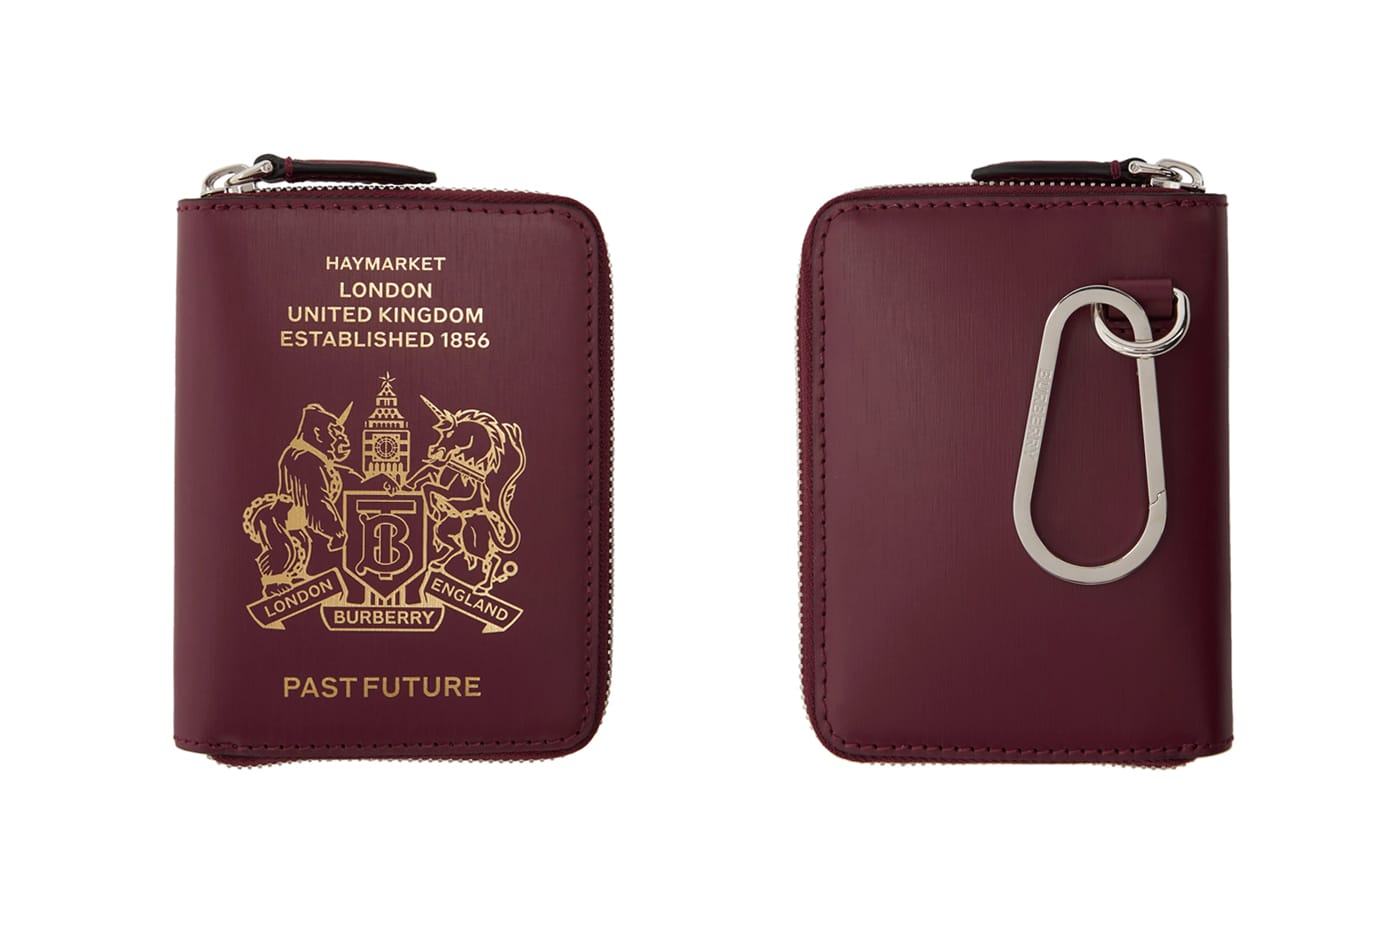 burberry leather passport holder